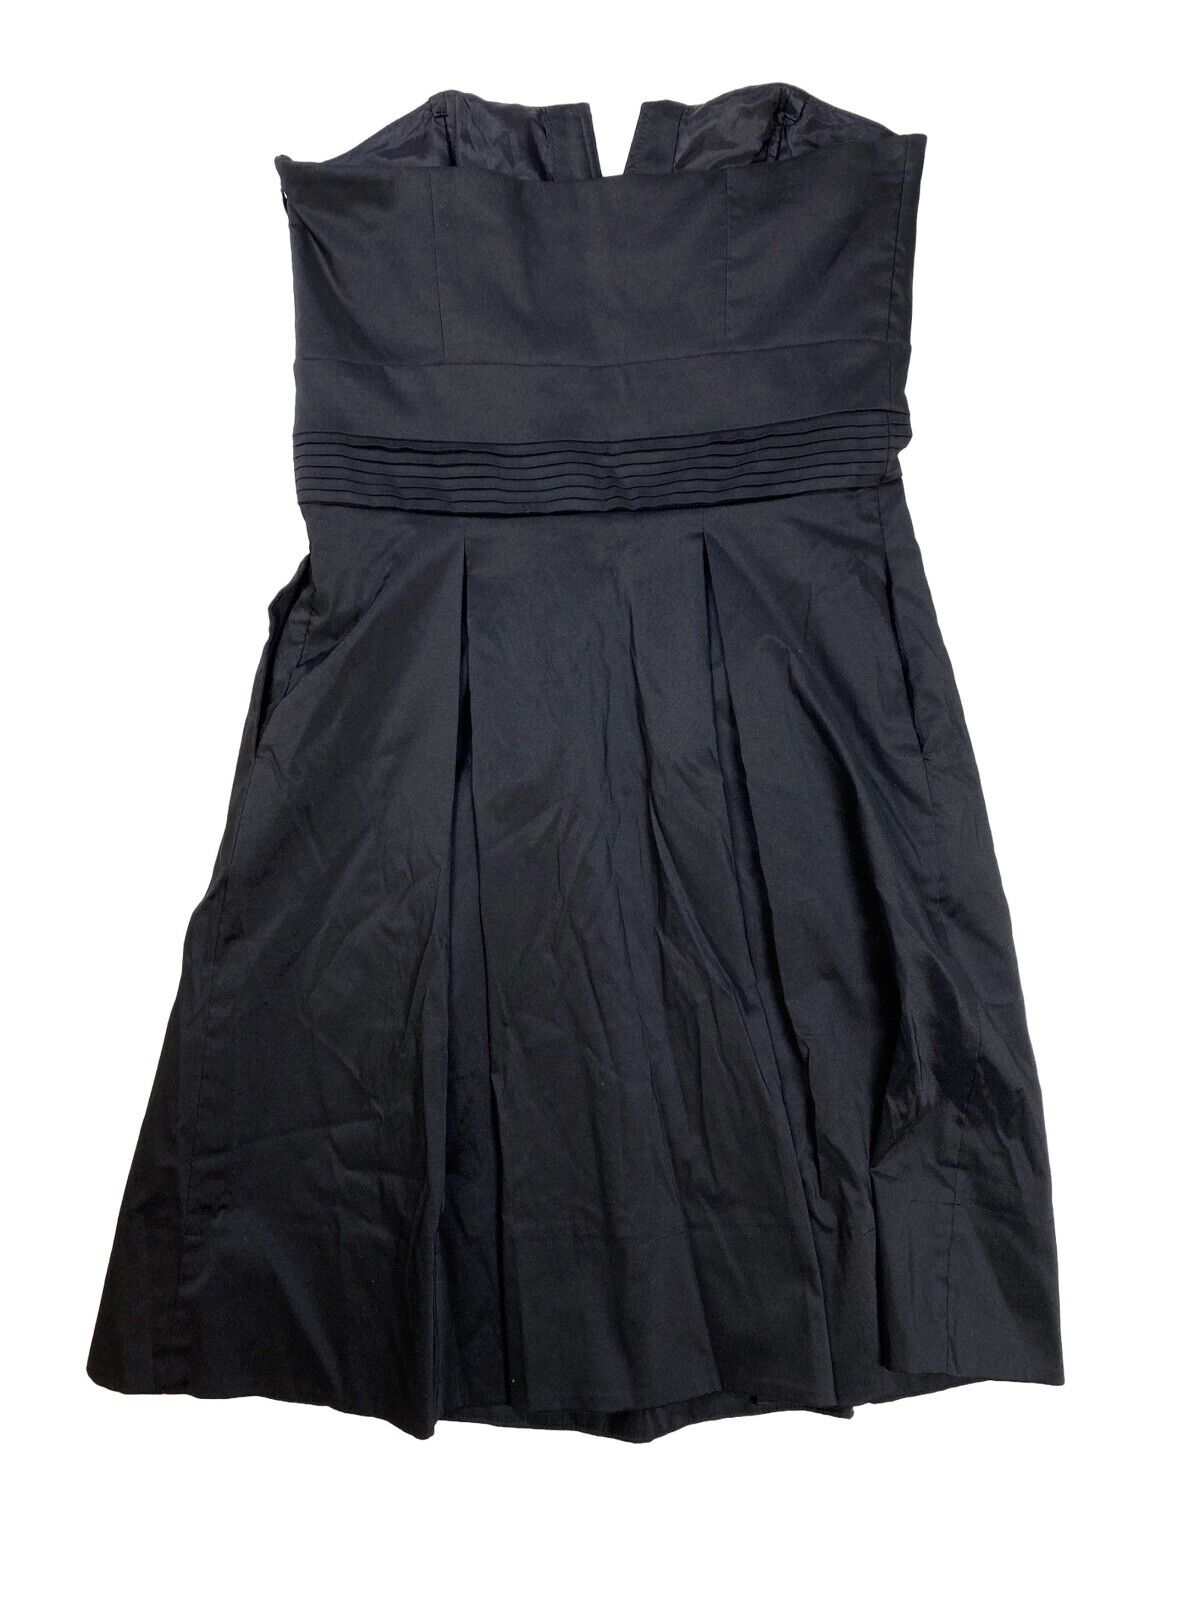 White House Black Market Women's Black Strapless A-Line Dress - 6